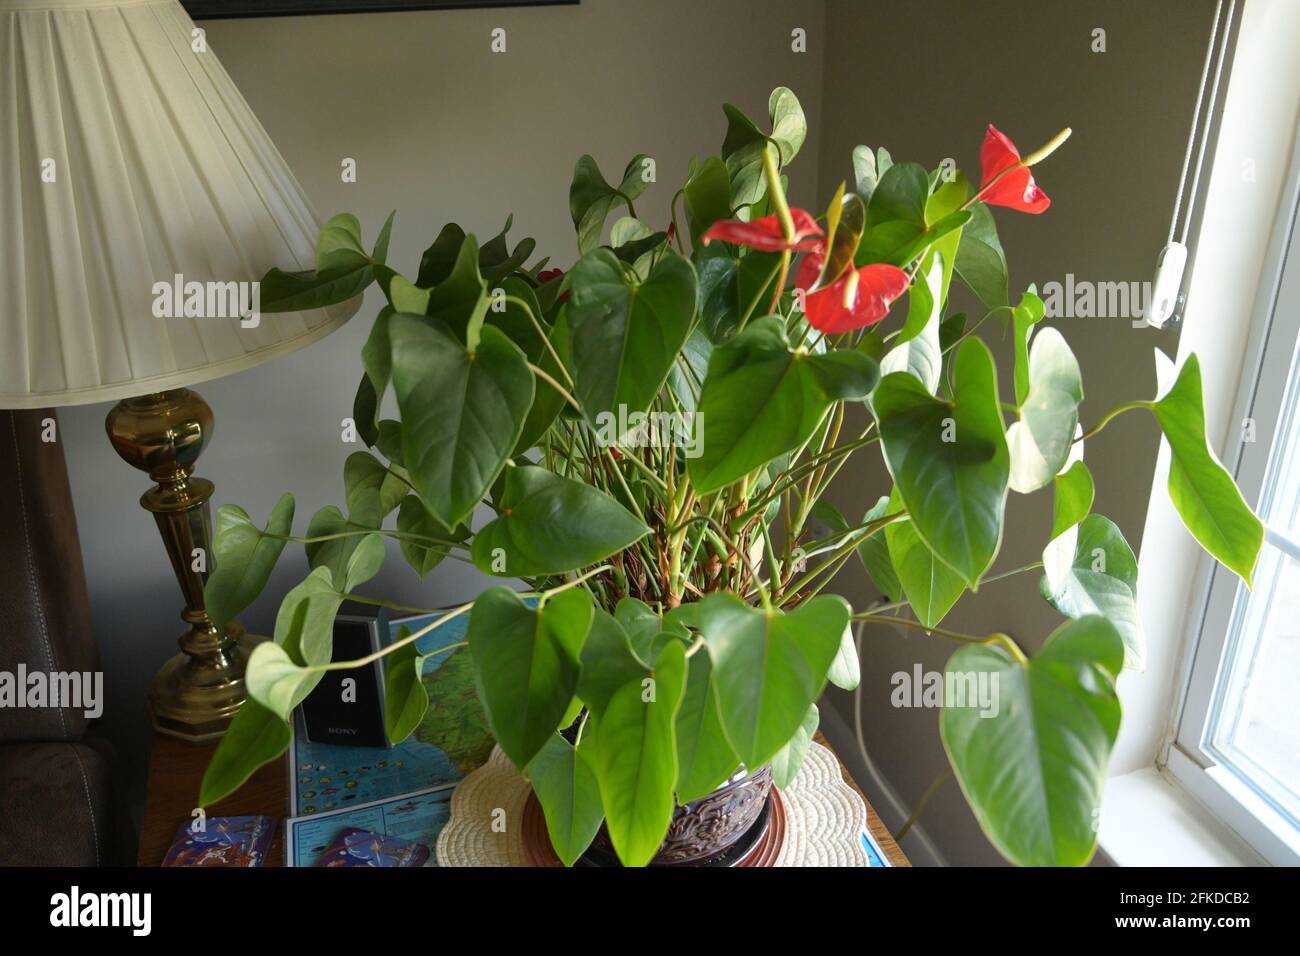 Amerikansk husplante hi-res stock photography and images - Alamy